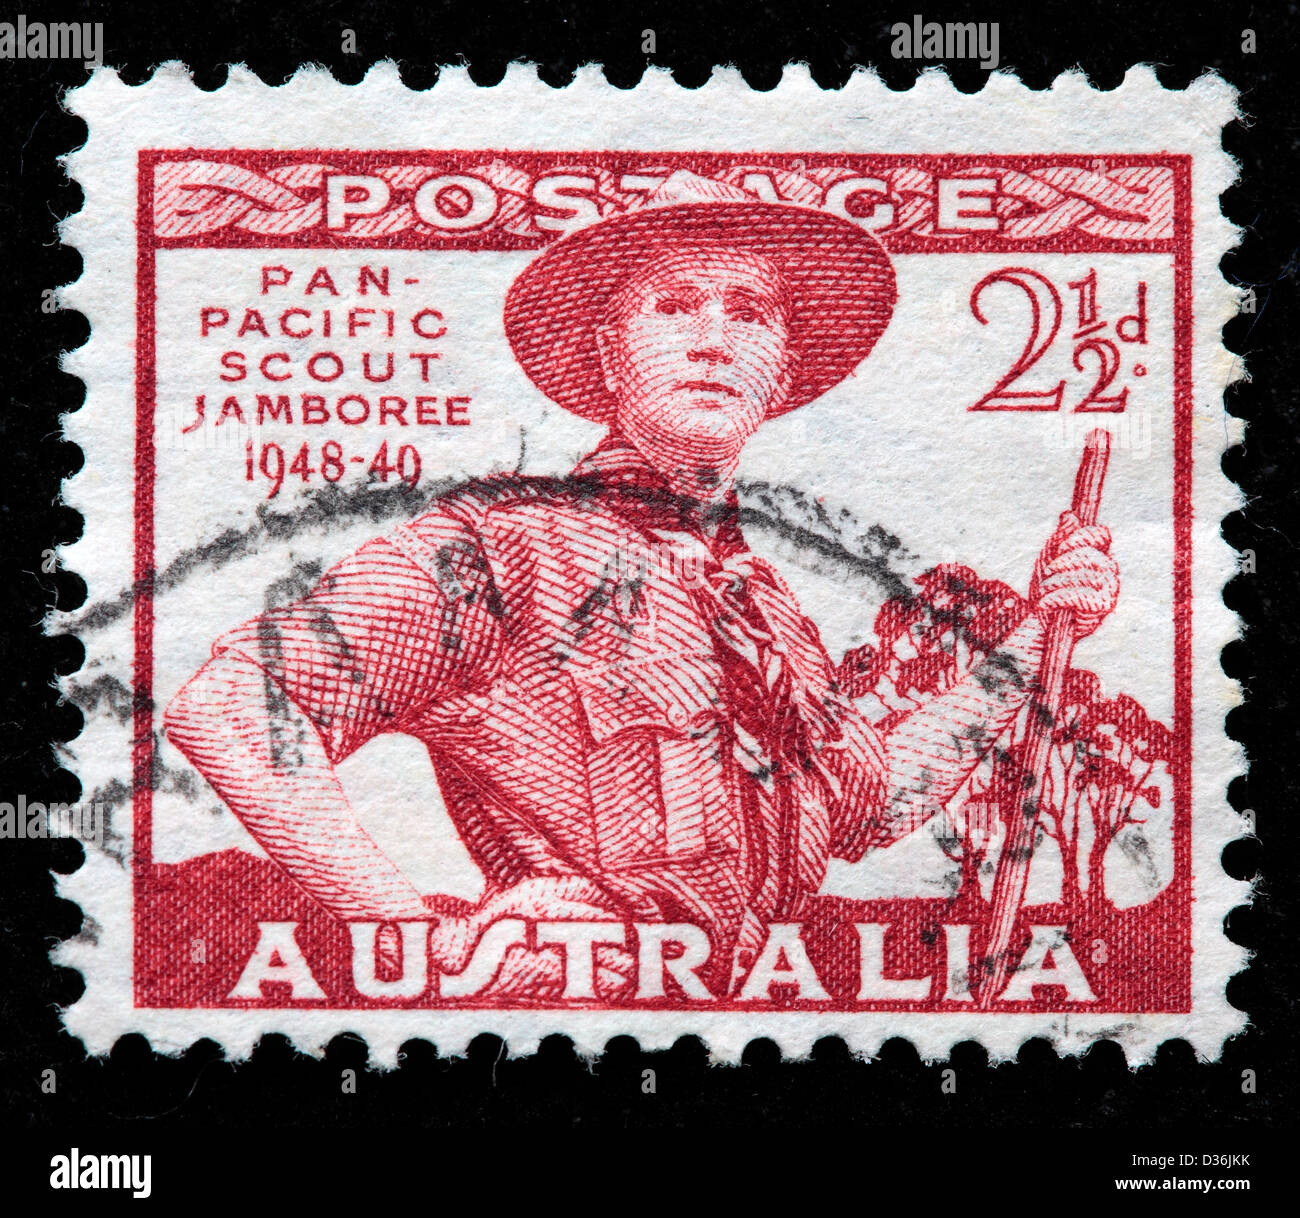 Pan-Pacific Scout Jamboree, postage stamp, Australia, 1948 Stock Photo